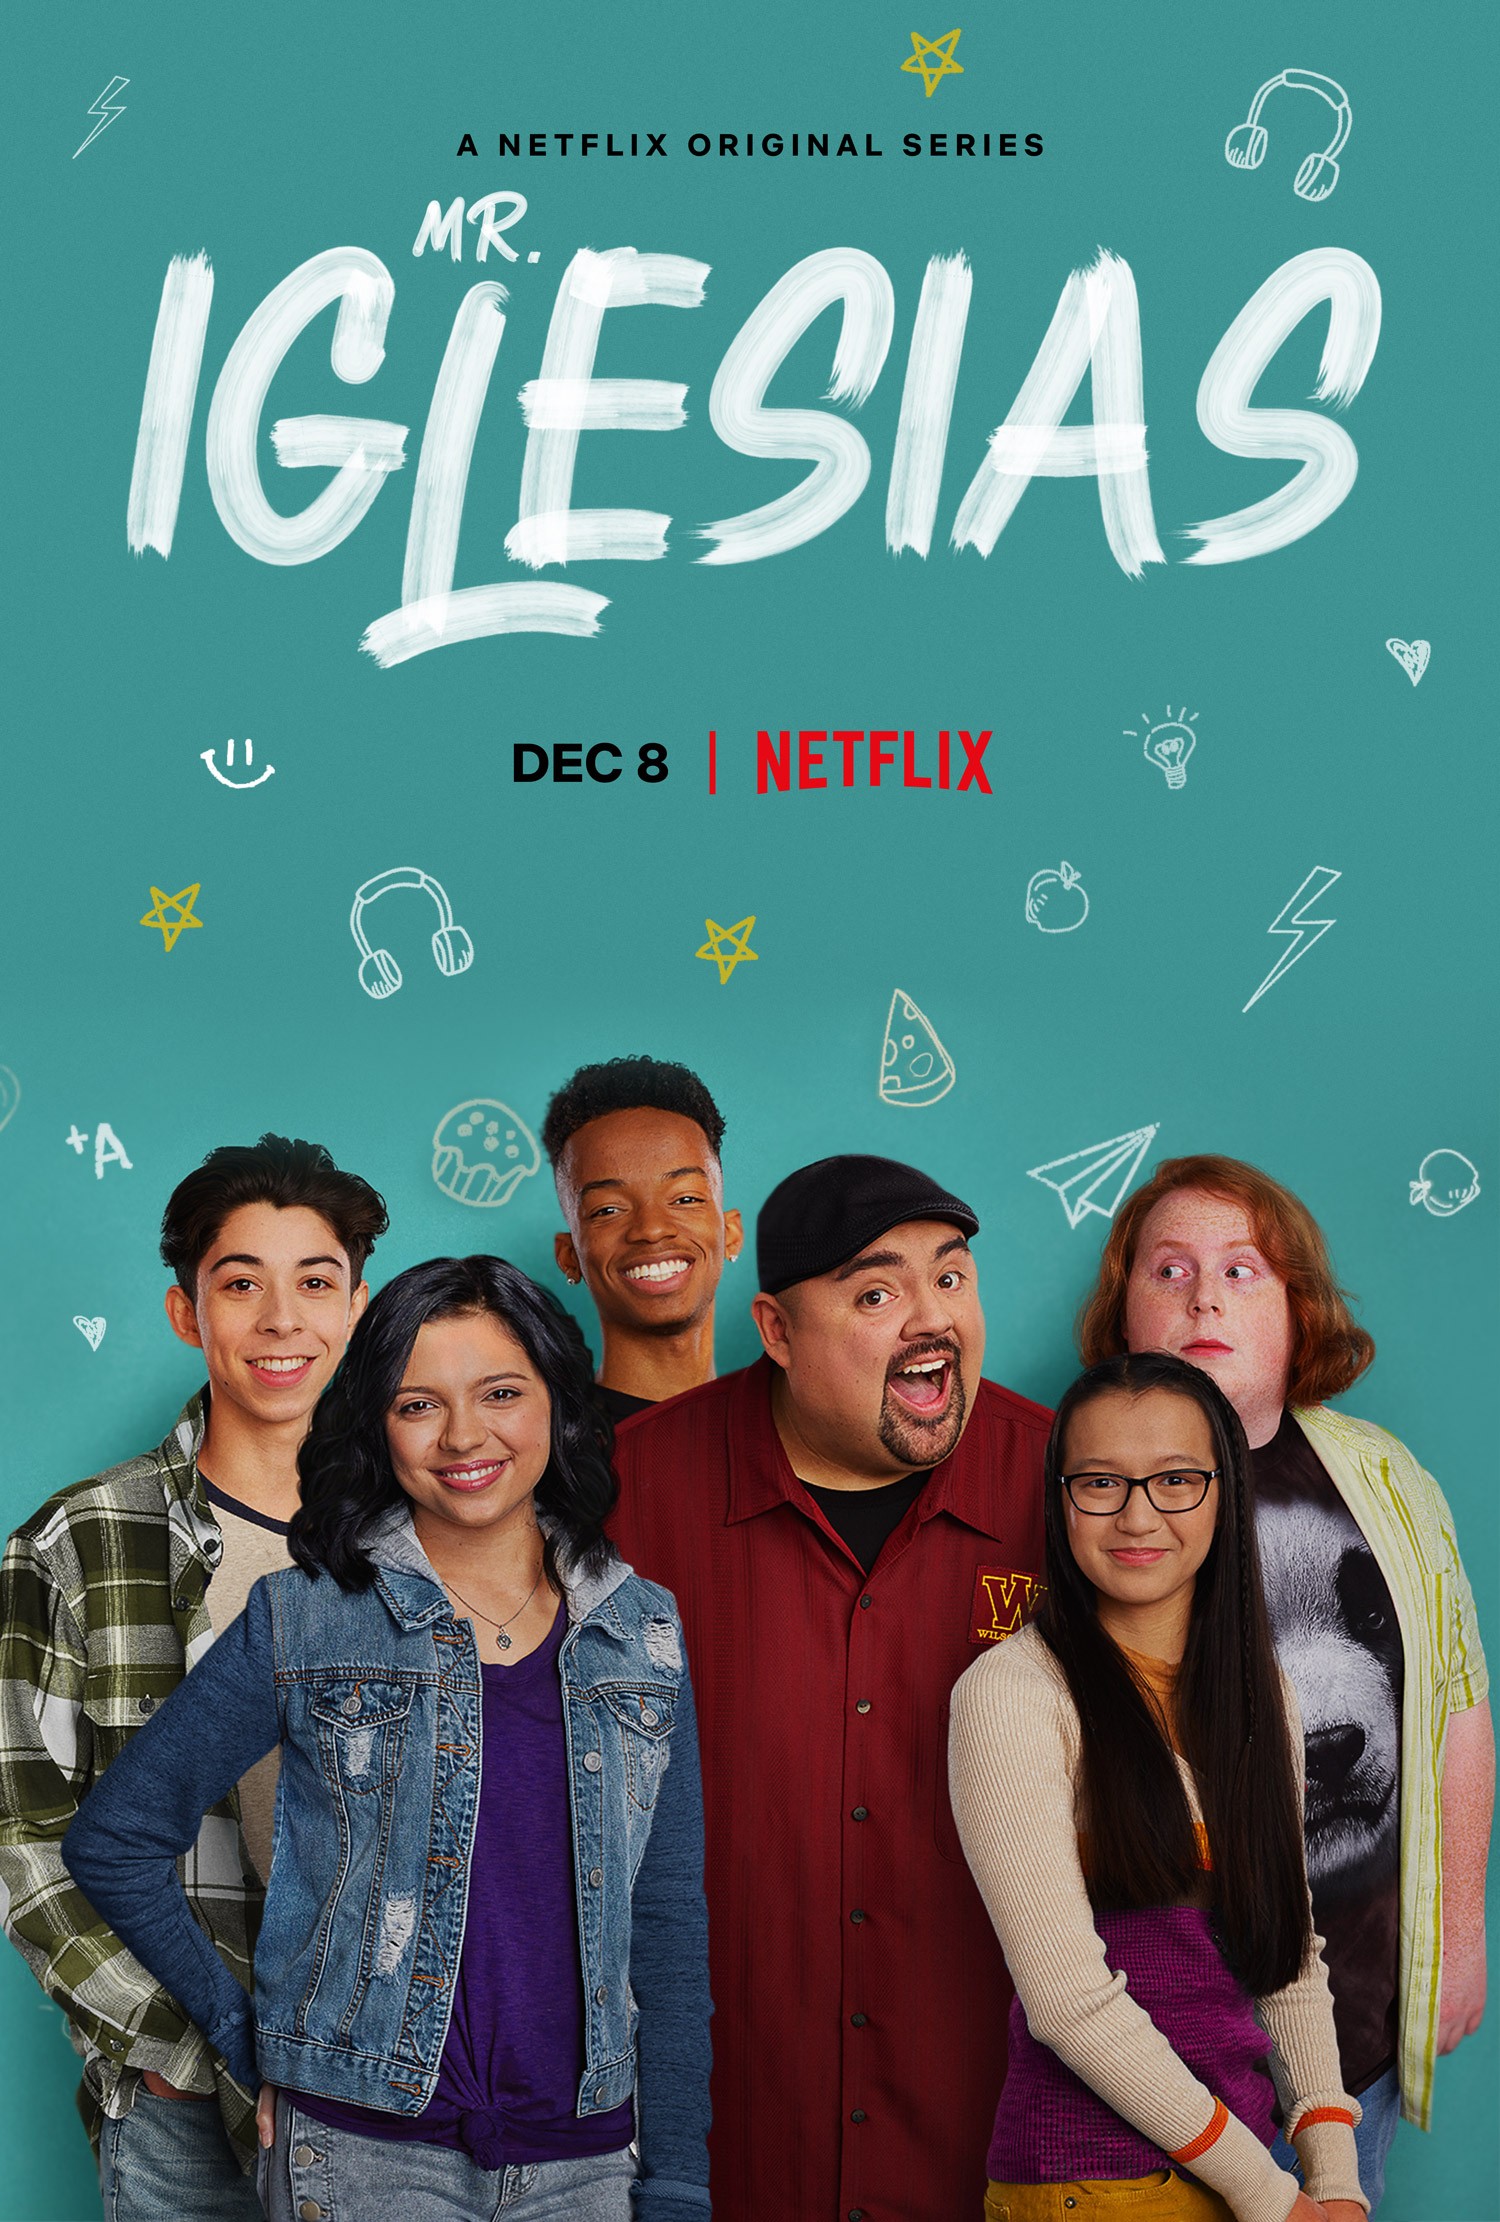 Interview: Gabriel Iglesias on His New Netflix Comedy Series